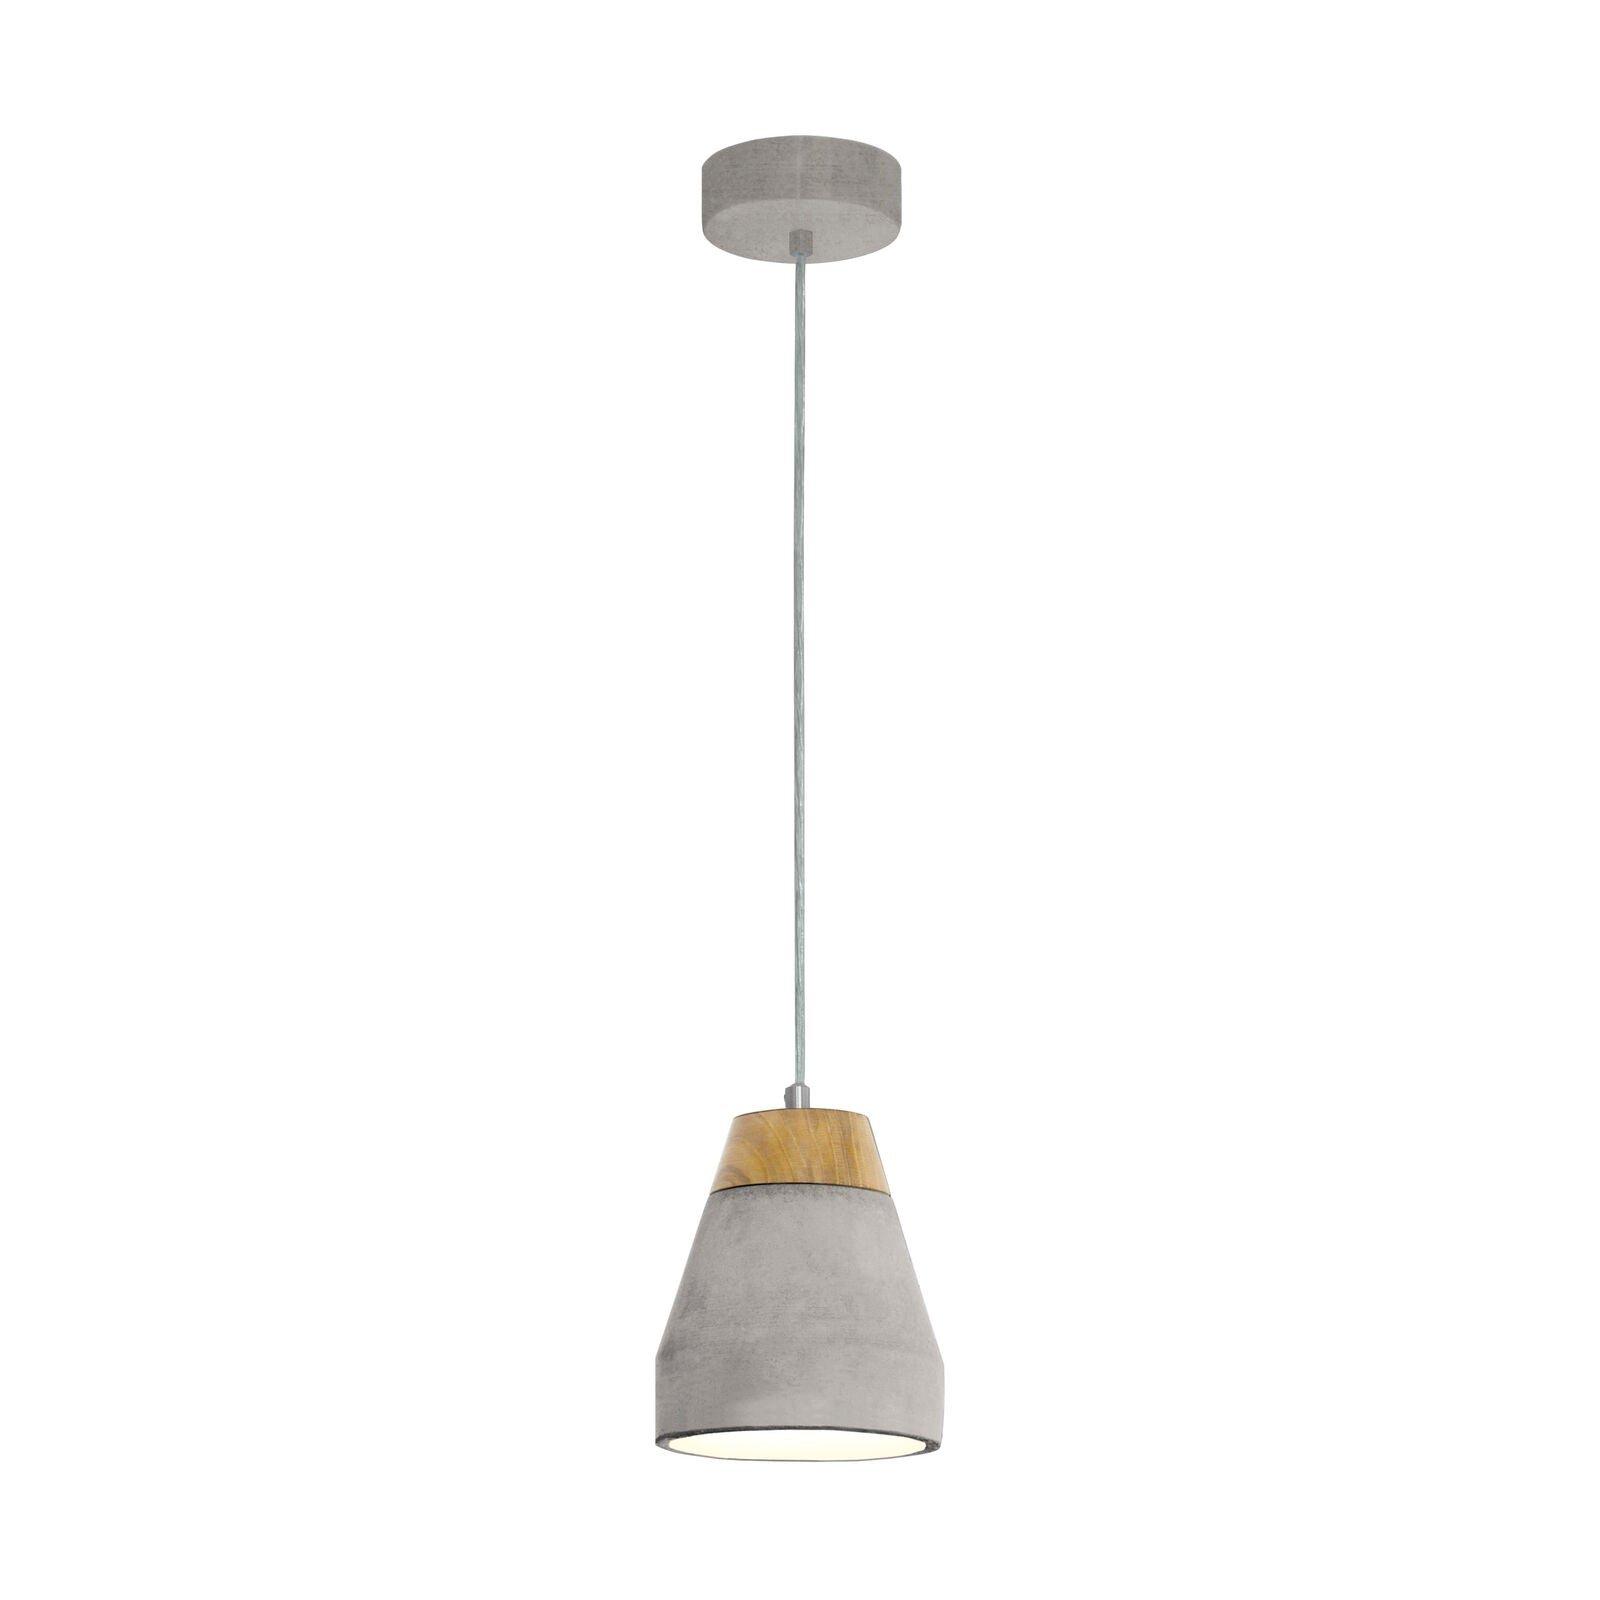 Pendant Ceiling Light Long Flex Shade Brown Wood Grey Concrete Bulb E27 1x60W